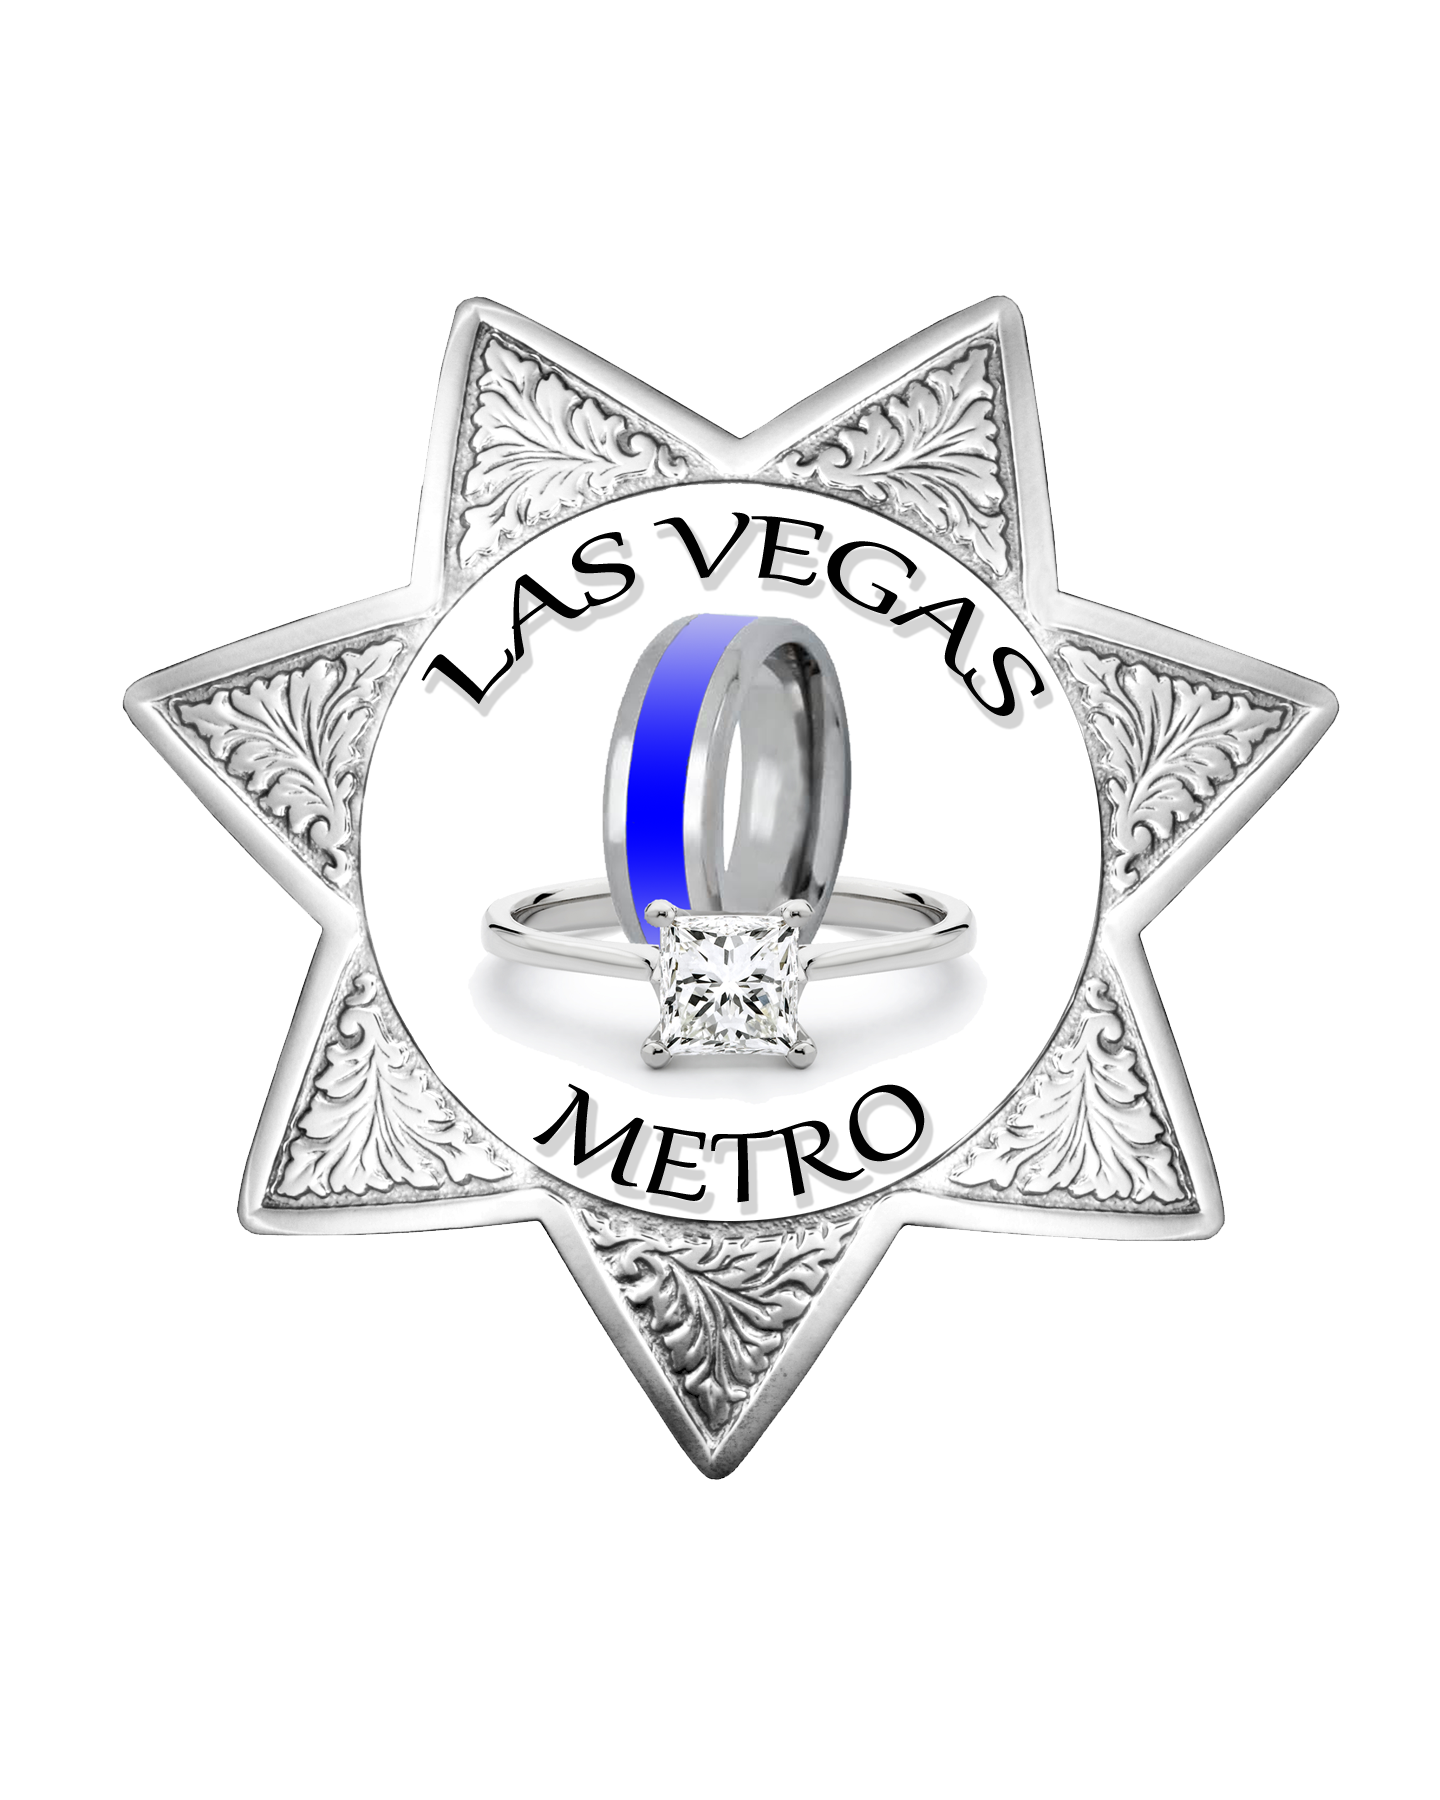 Las Vegas Metro Police Wives